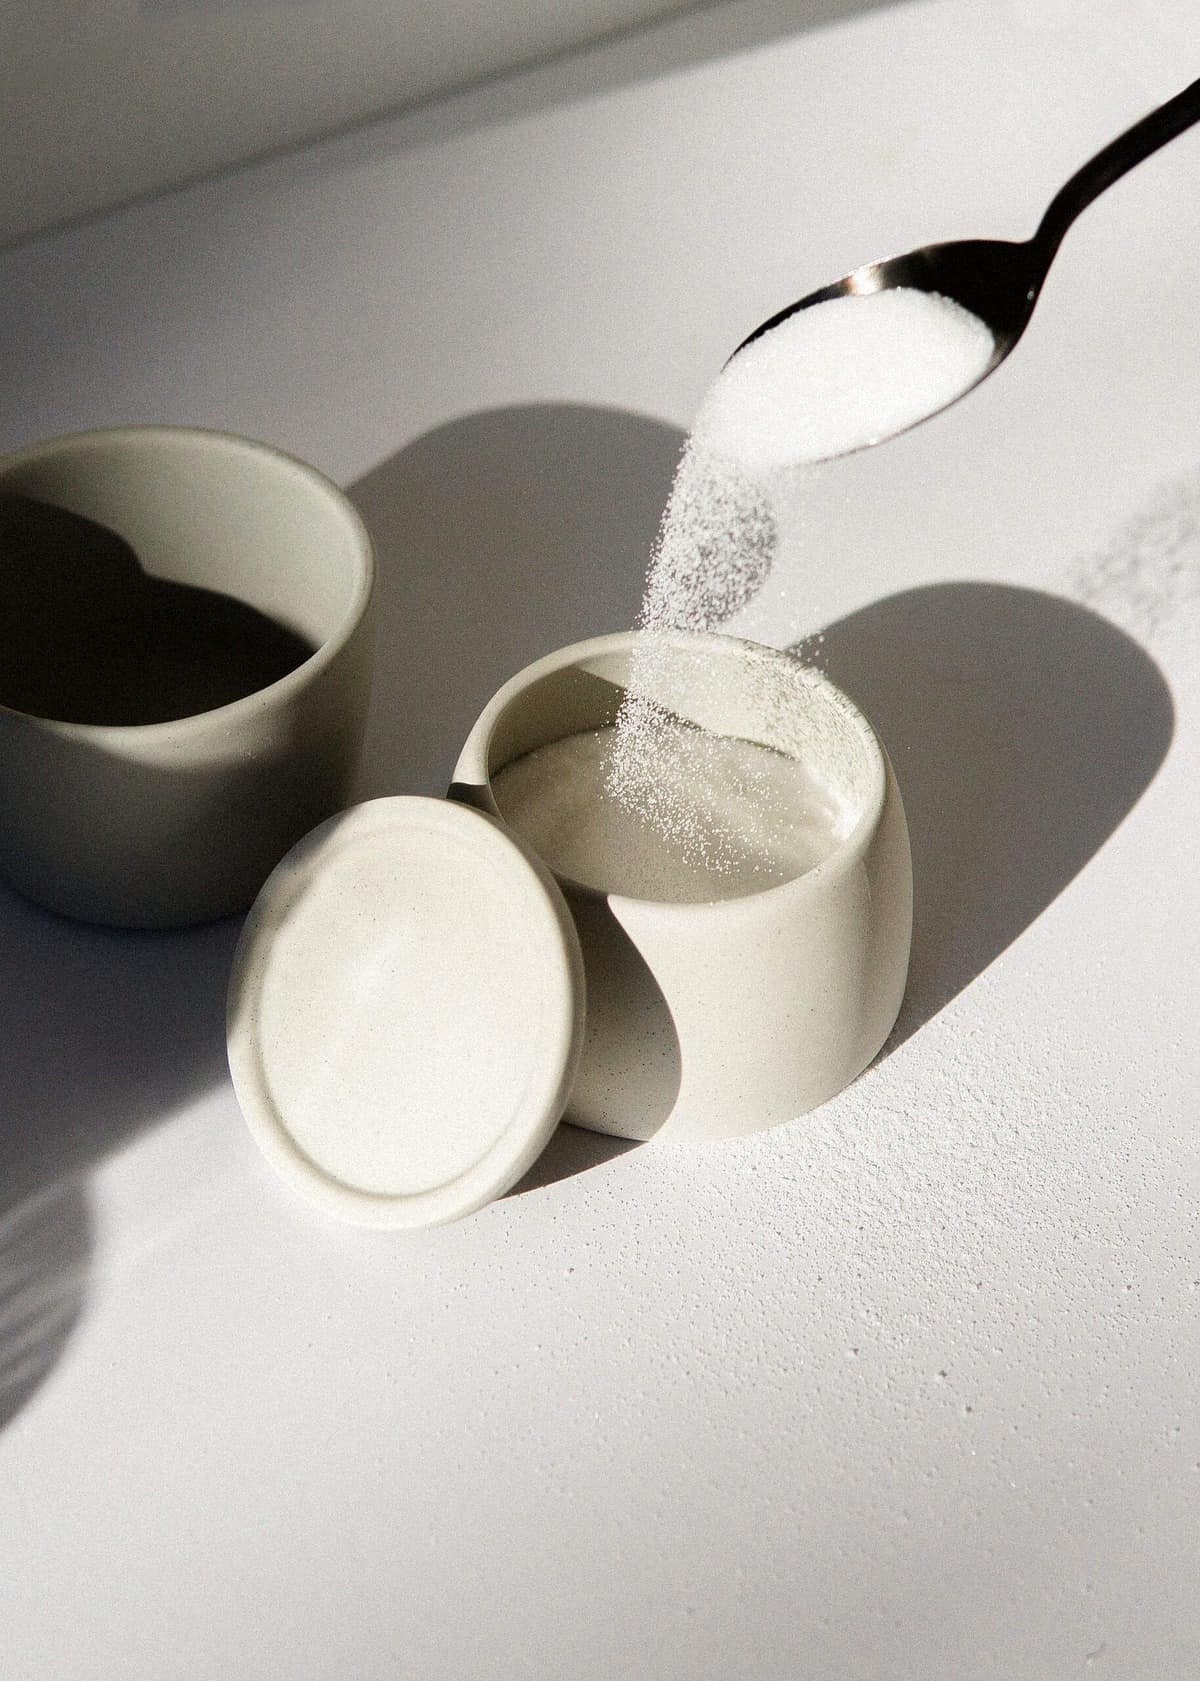 A spoon pouring sugar into a ceramic container. 